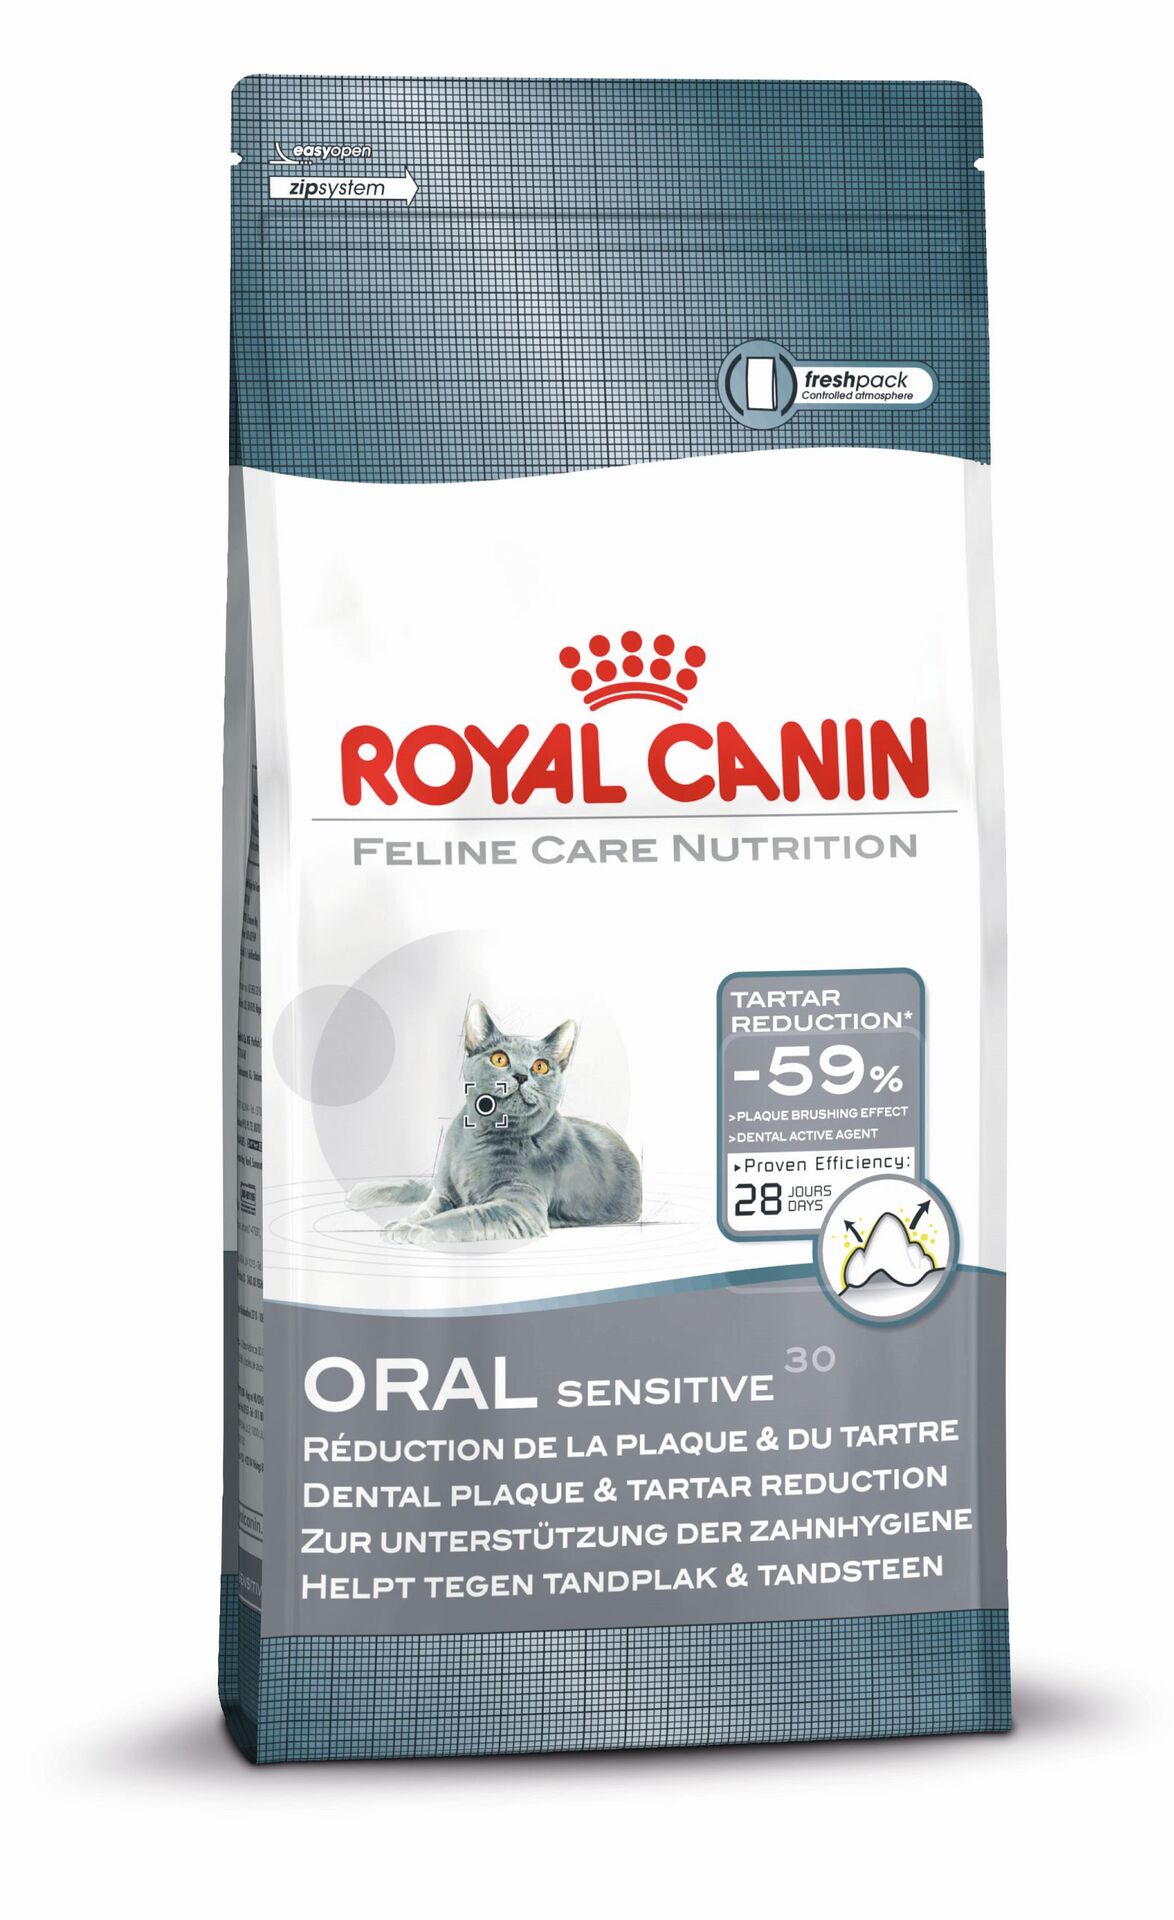 Royal Canin Feline Oral Sensitive 30